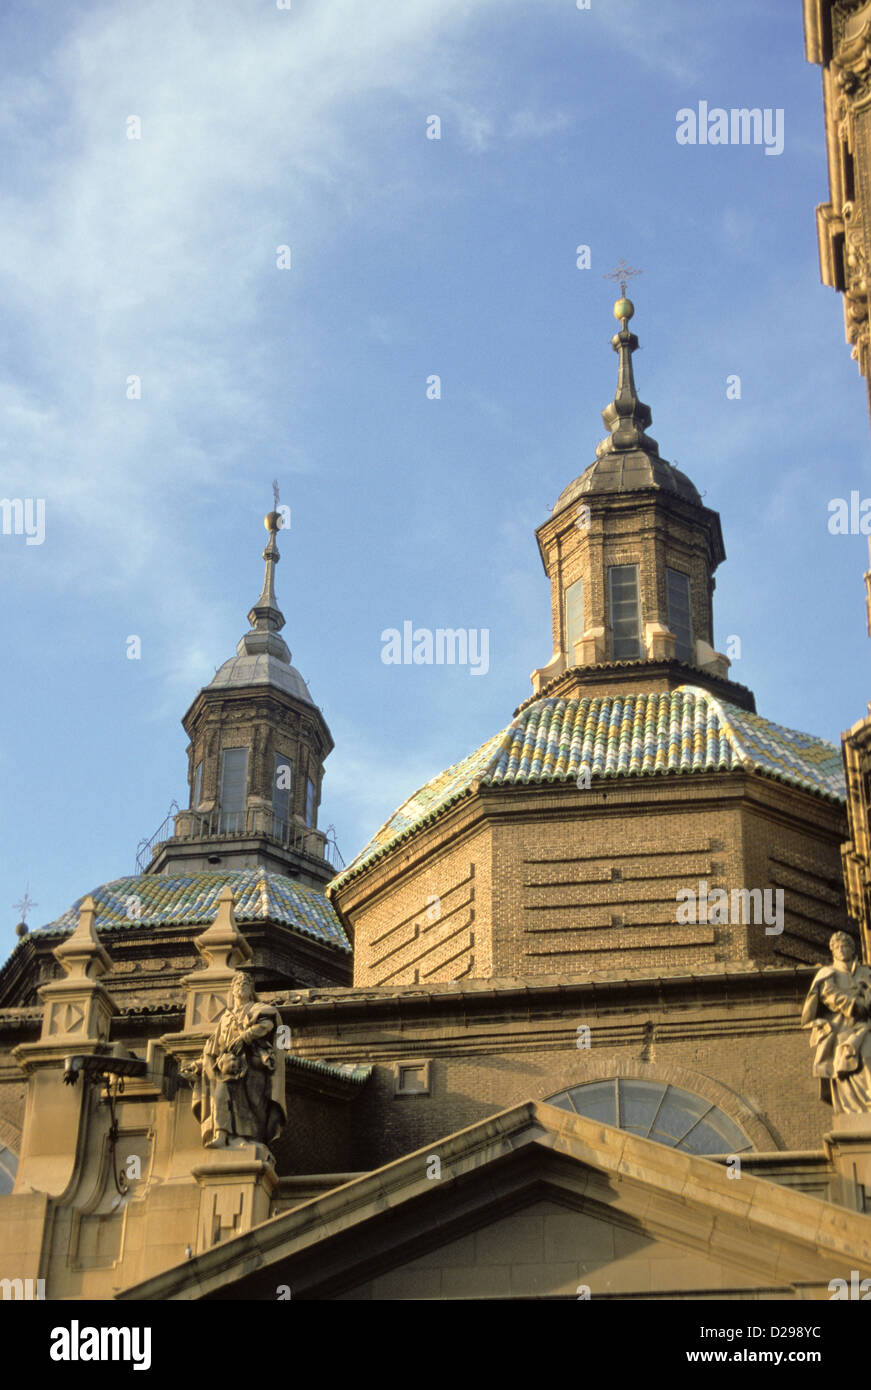 Spanien, Zaragoza. Basilica De Nuestra Senora Del Pilar. Detail mit Ziegeldach. Stockfoto